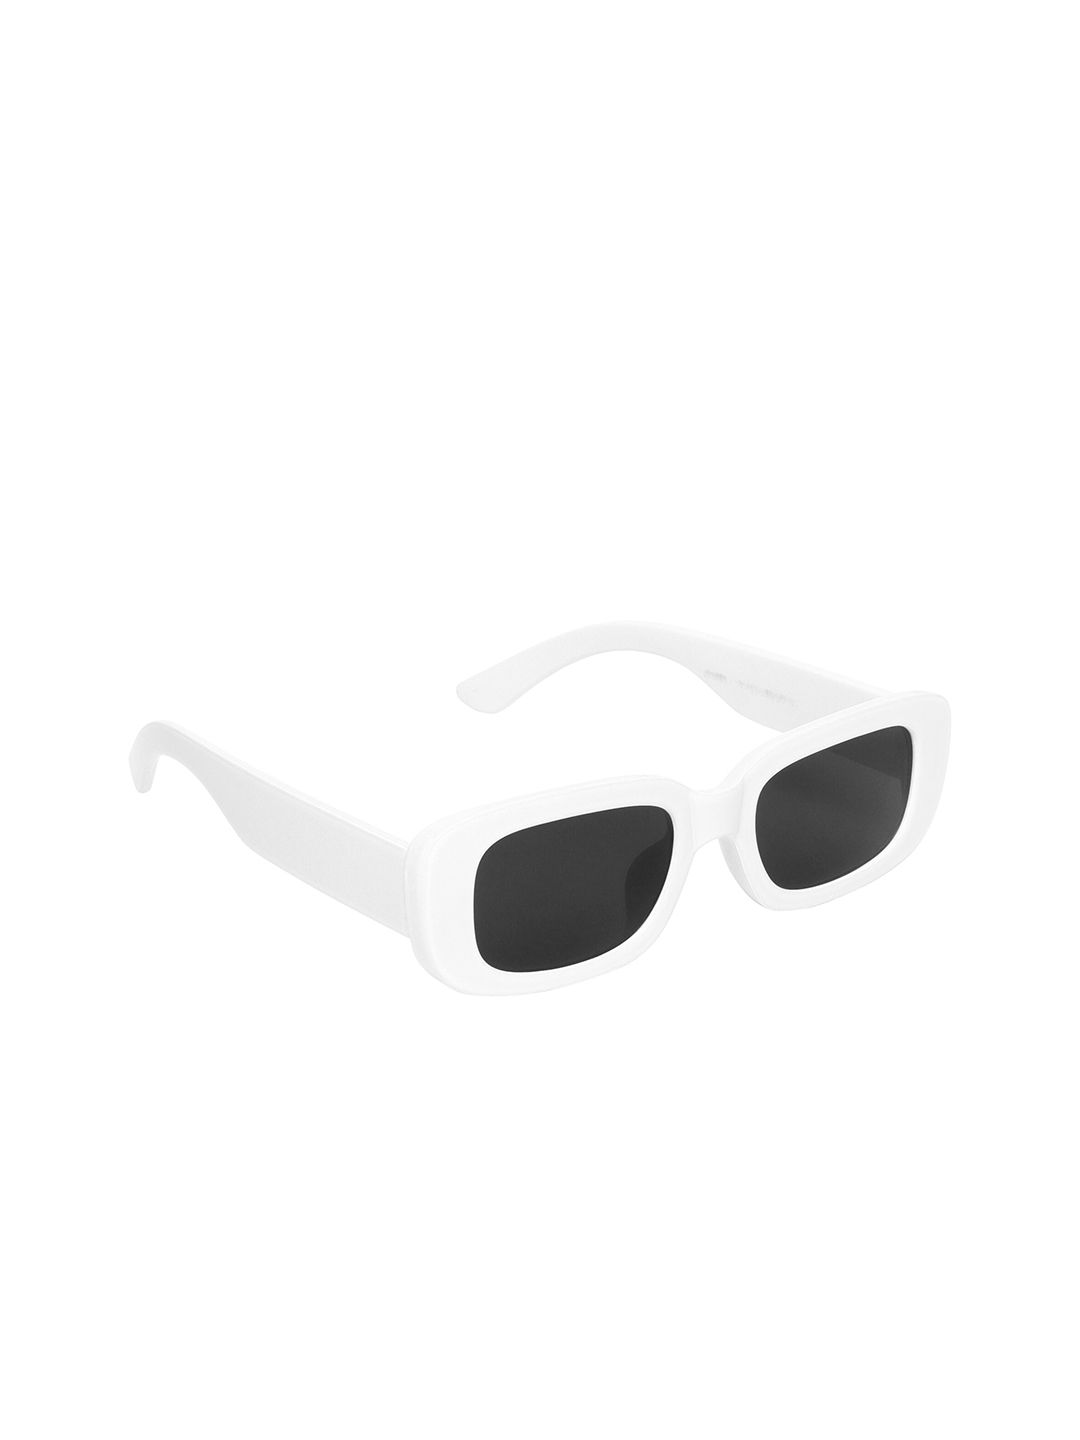 CRIBA Unisex Black Lens & White Wayfarer Sunglasses with UV Protected Lens Price in India